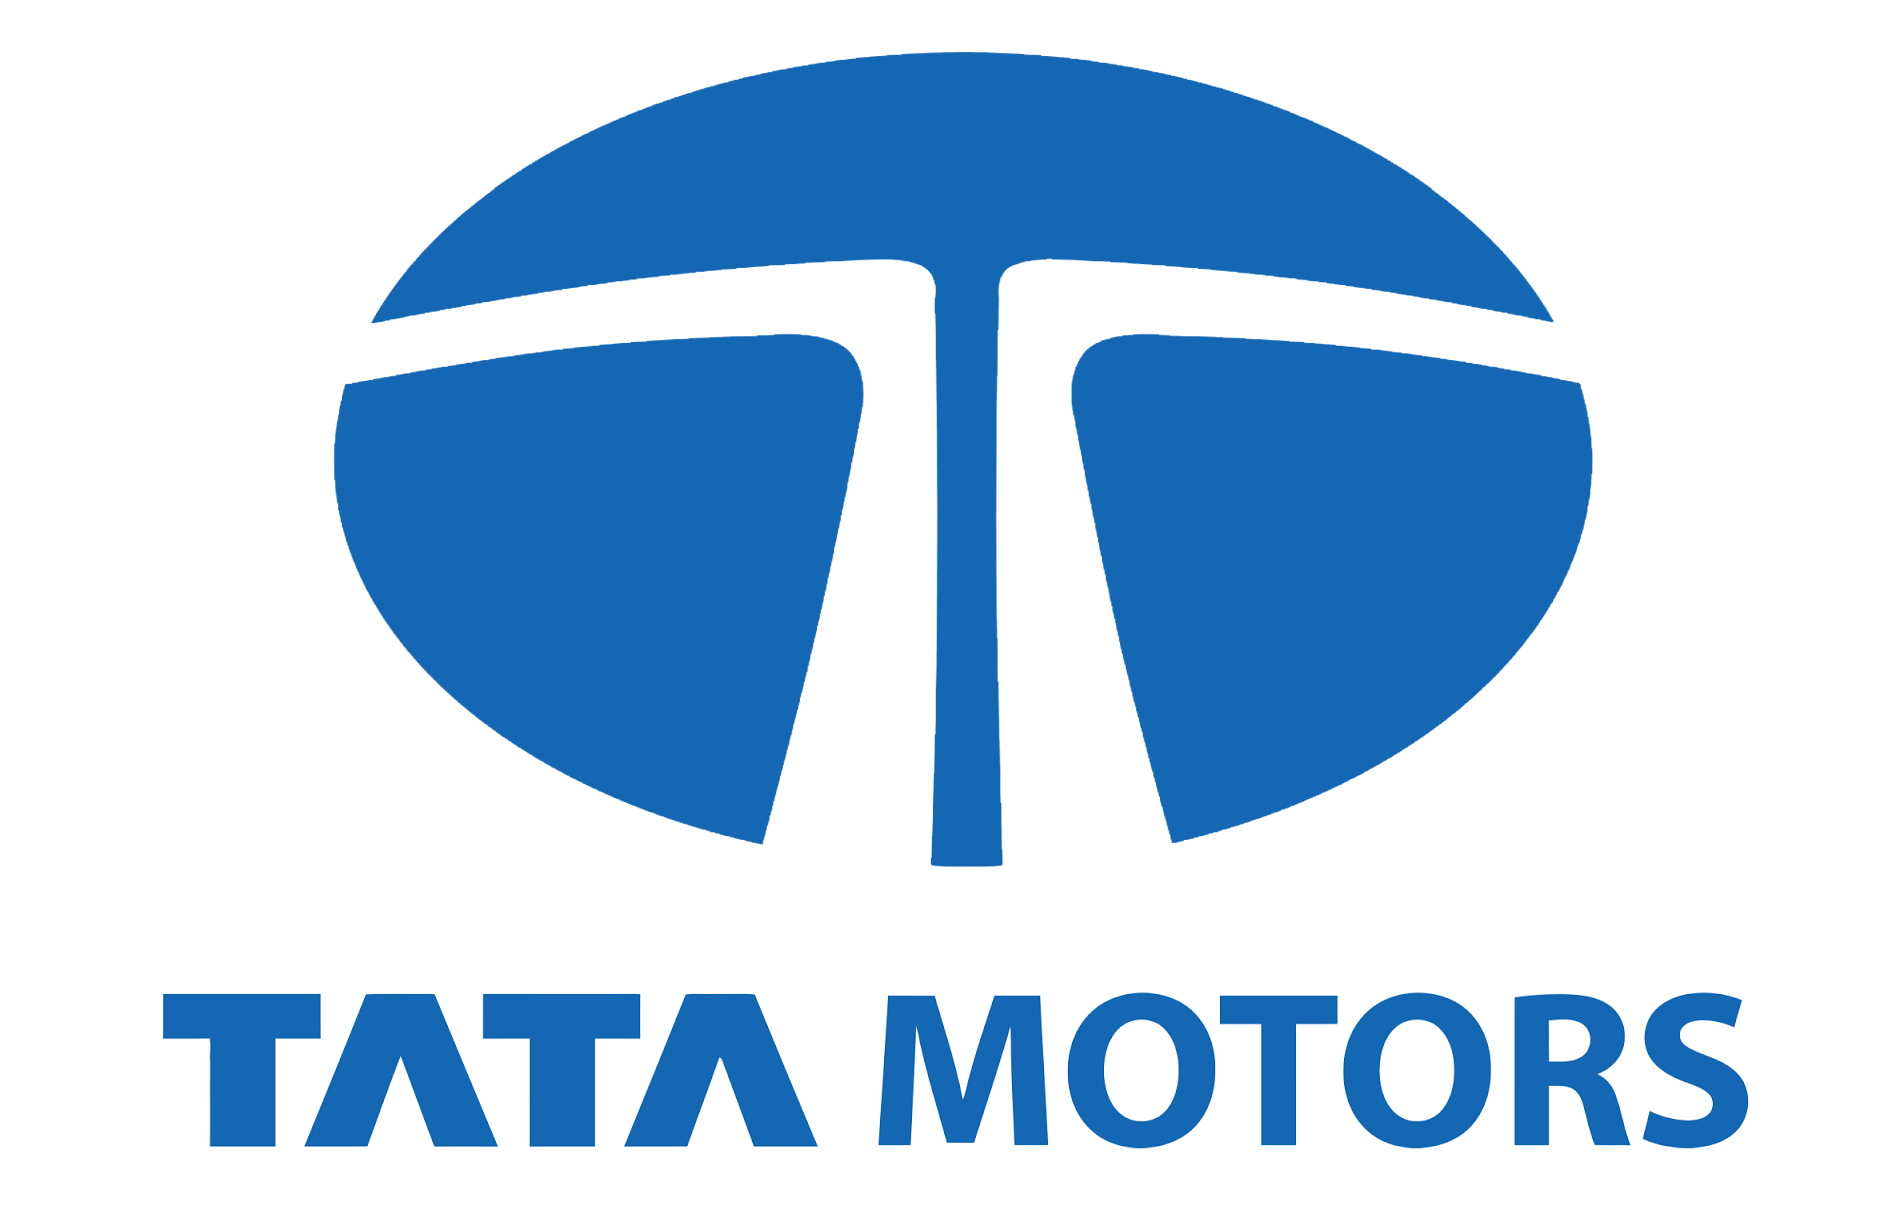 Tata Motors Cars Showroom - Prathammalik Auto Matrix Private Limited|Show Room|Automotive